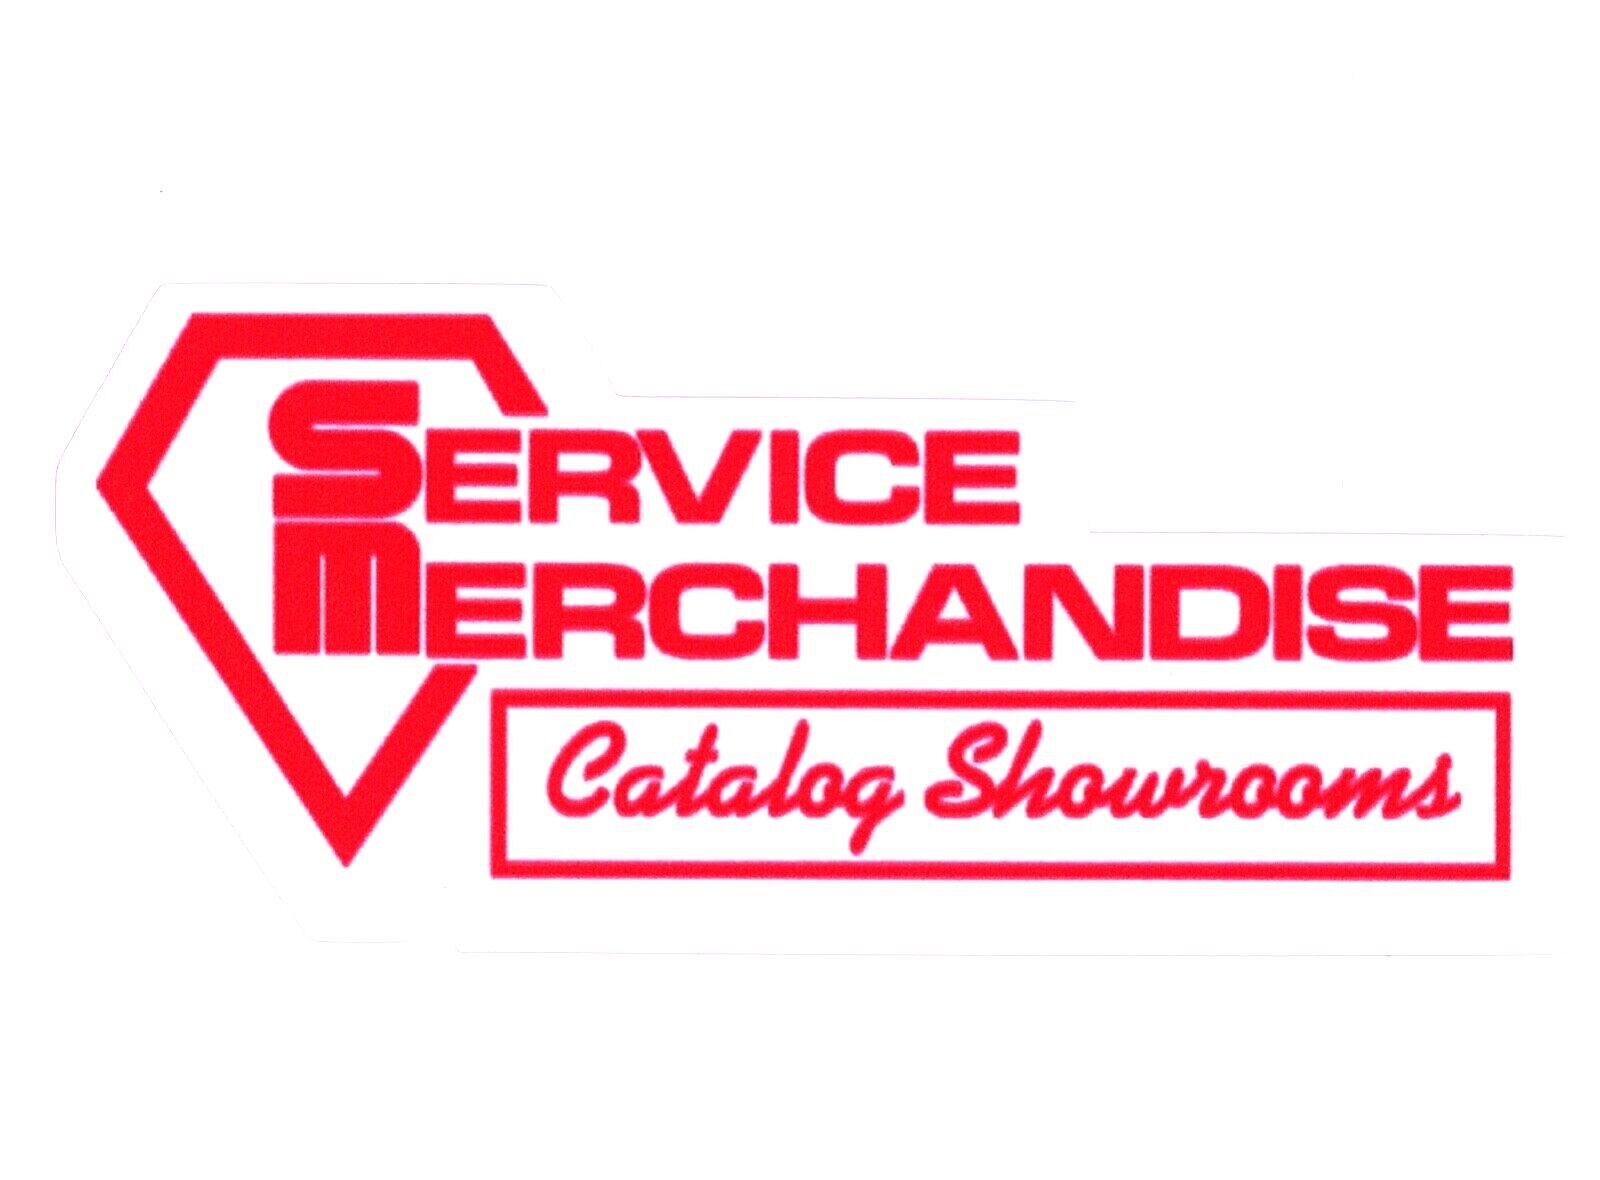 Service Merchandise Catalog Showrooms Logo Sticker (Reproduction)